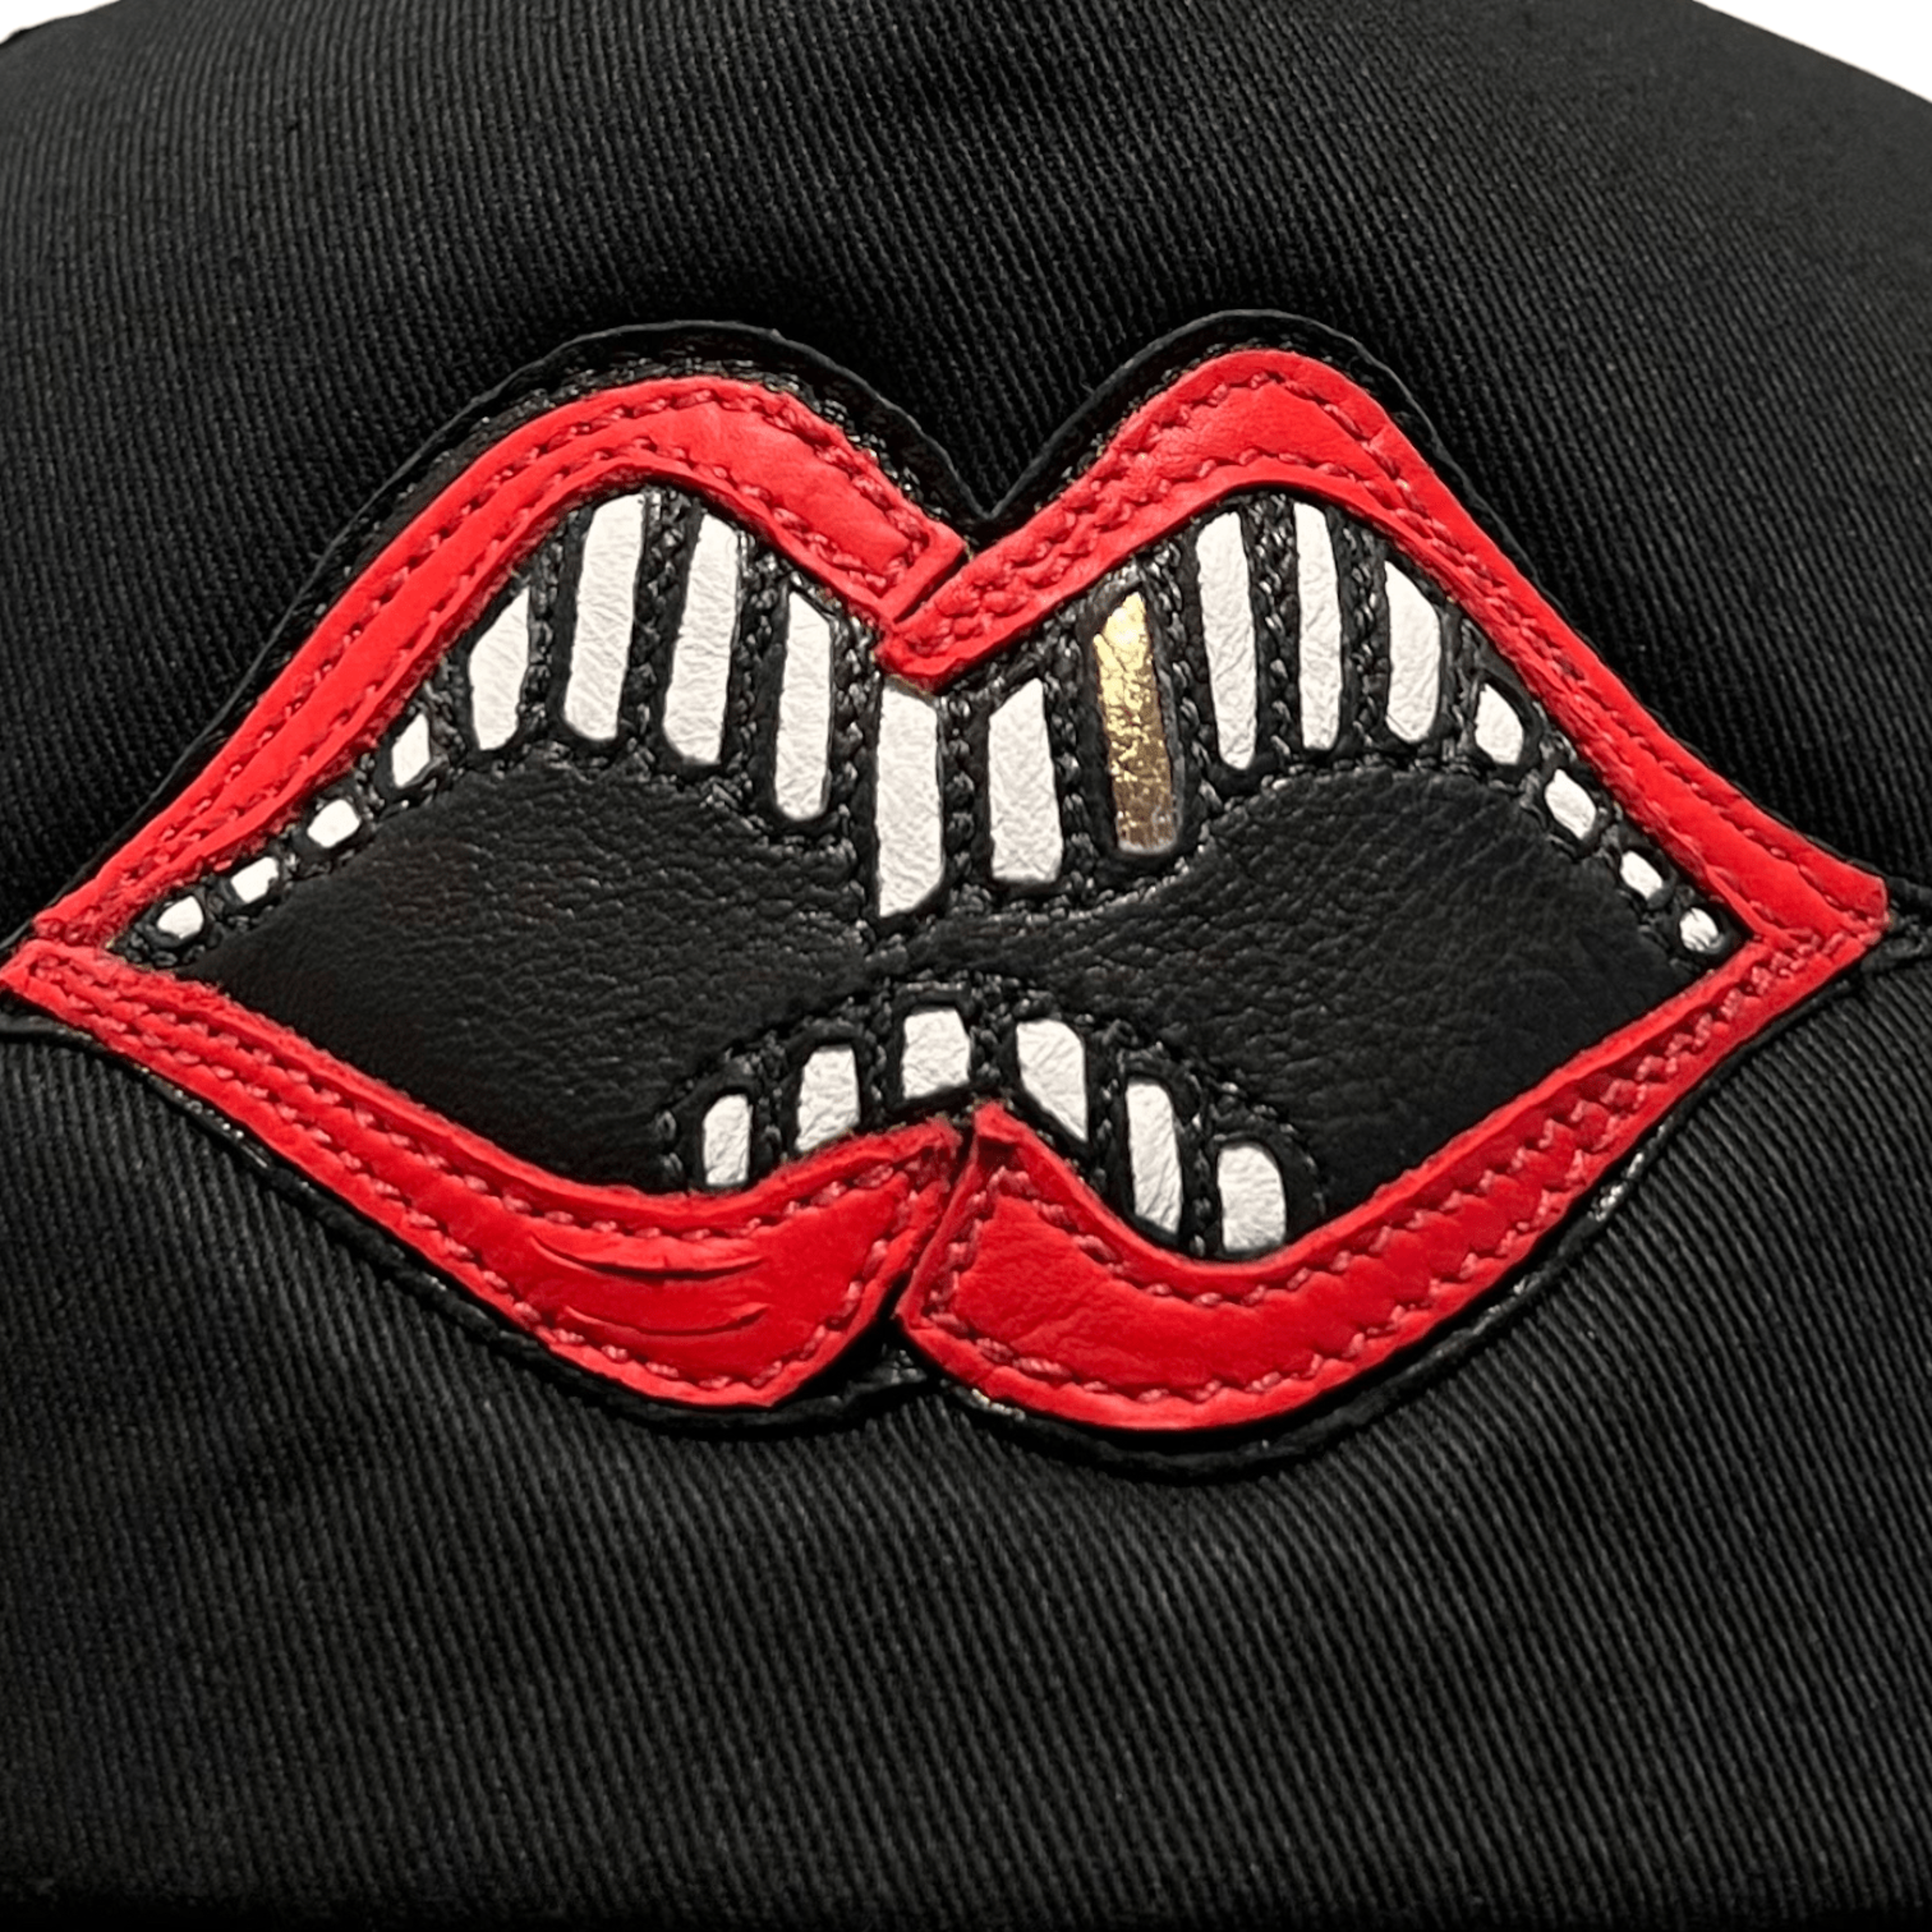 Alternate View 1 of Chrome Hearts Matty Boy Leather Chomper Lips Trucker Hat Black R